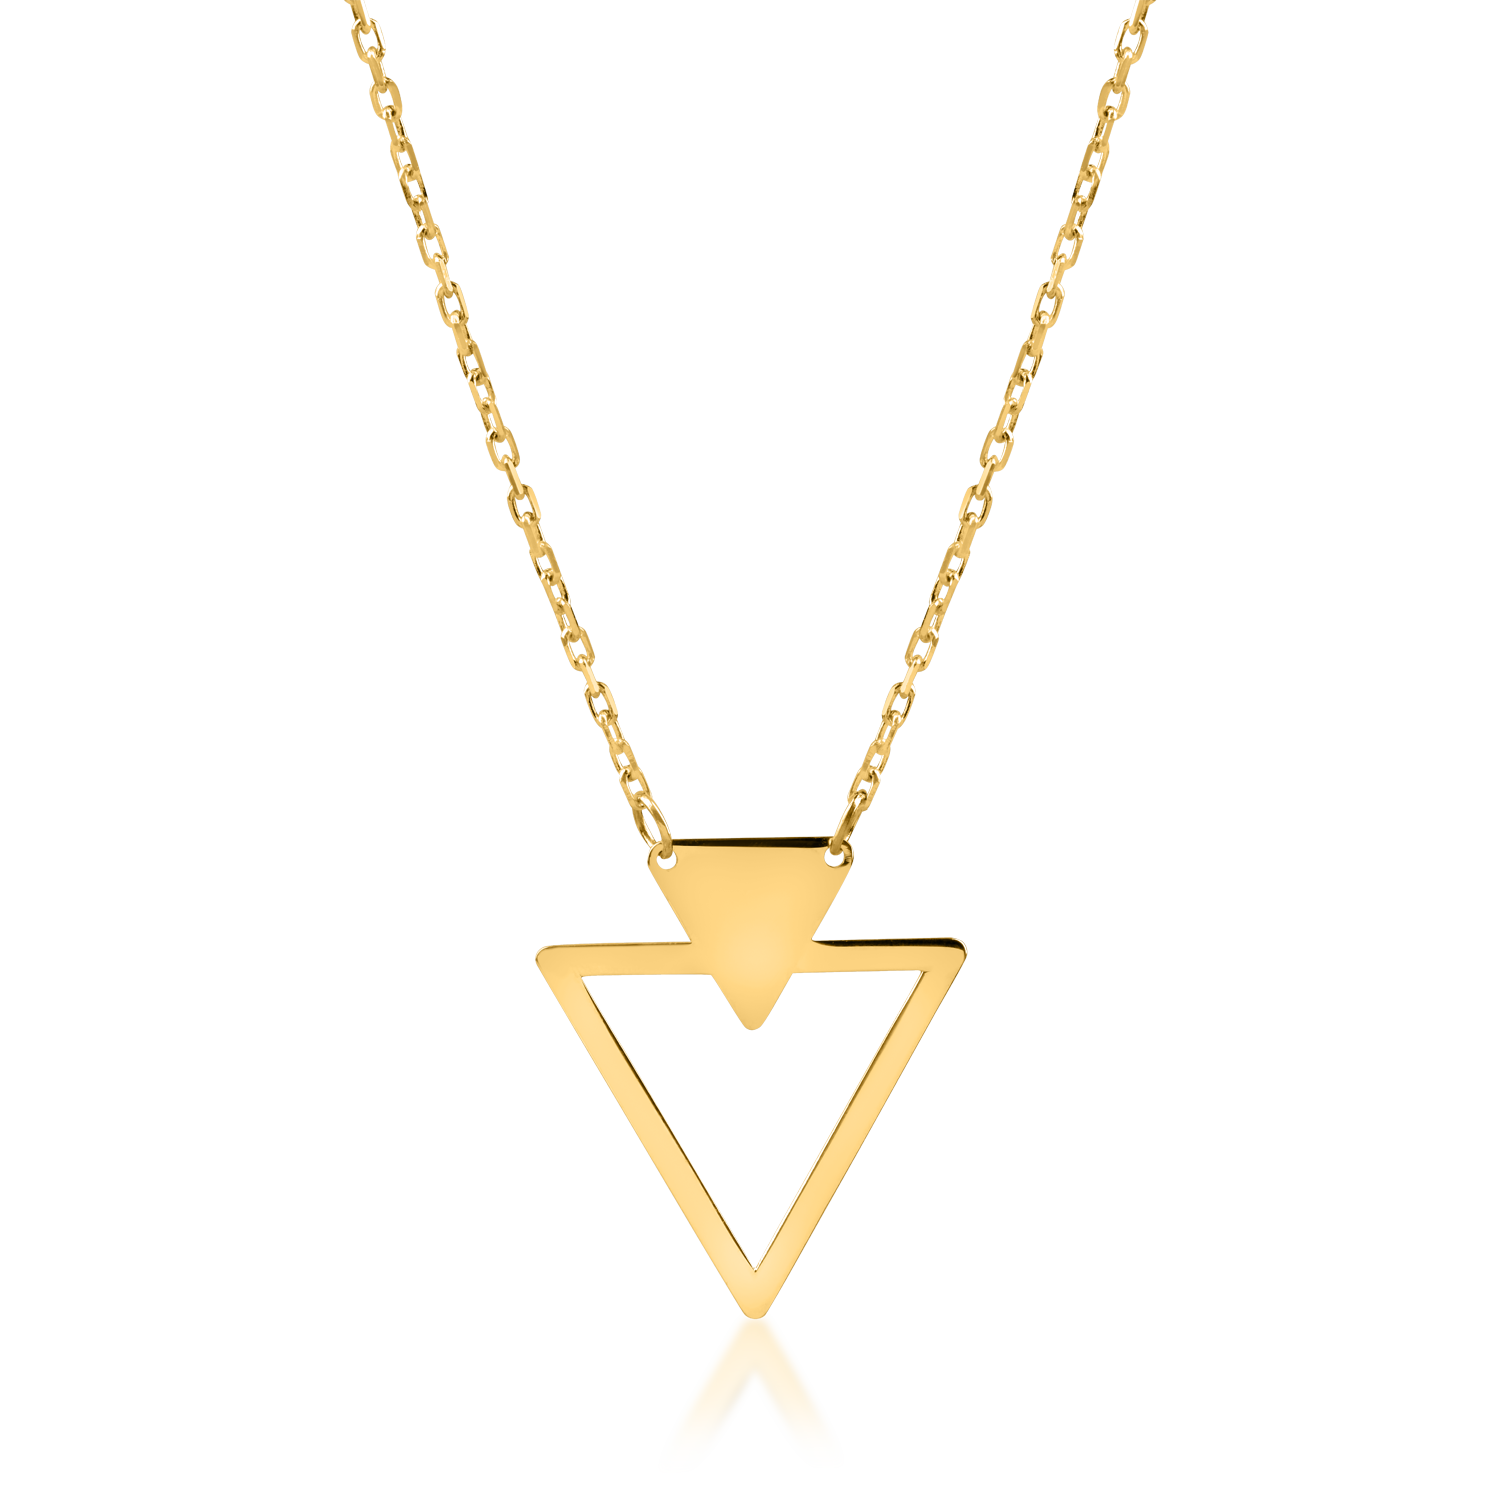 14K yellow gold geometric pendant necklace